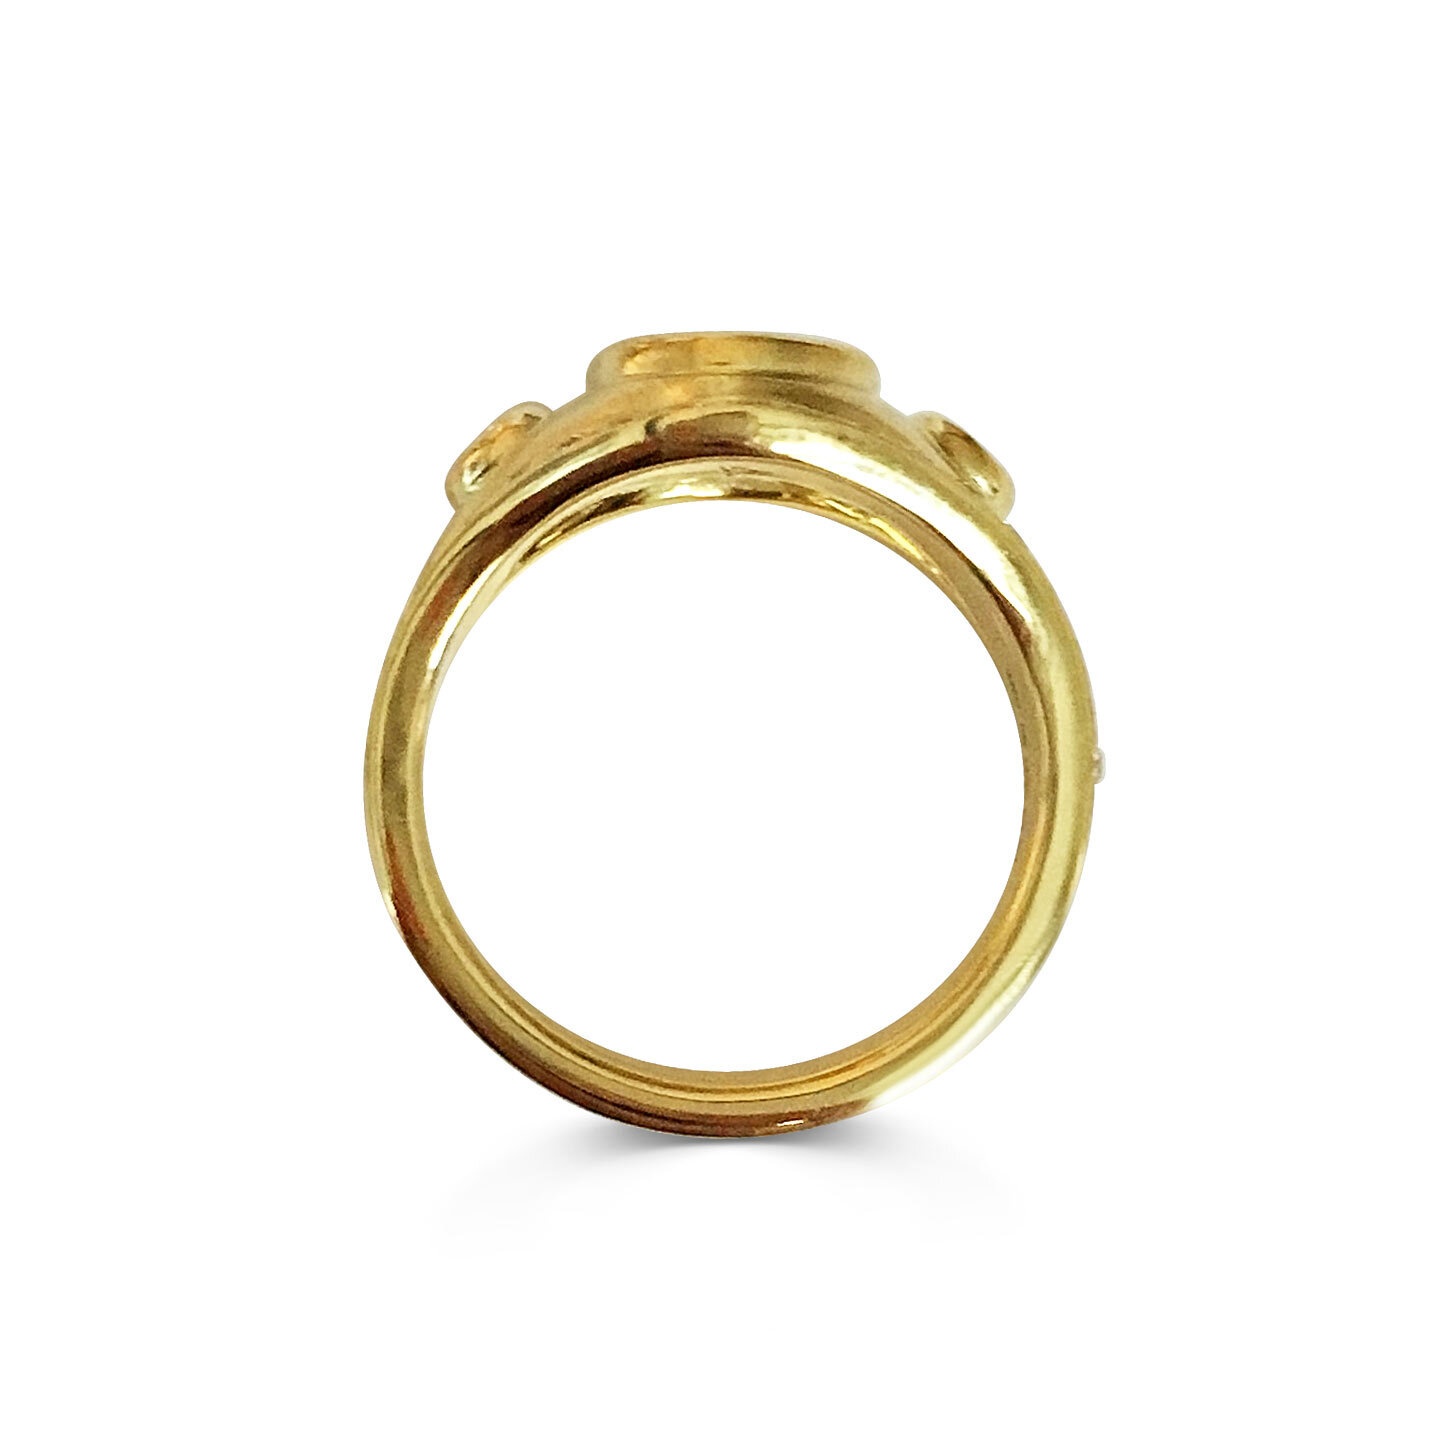 Diamond Etruscan ring mounted in 18ct yellow gold.